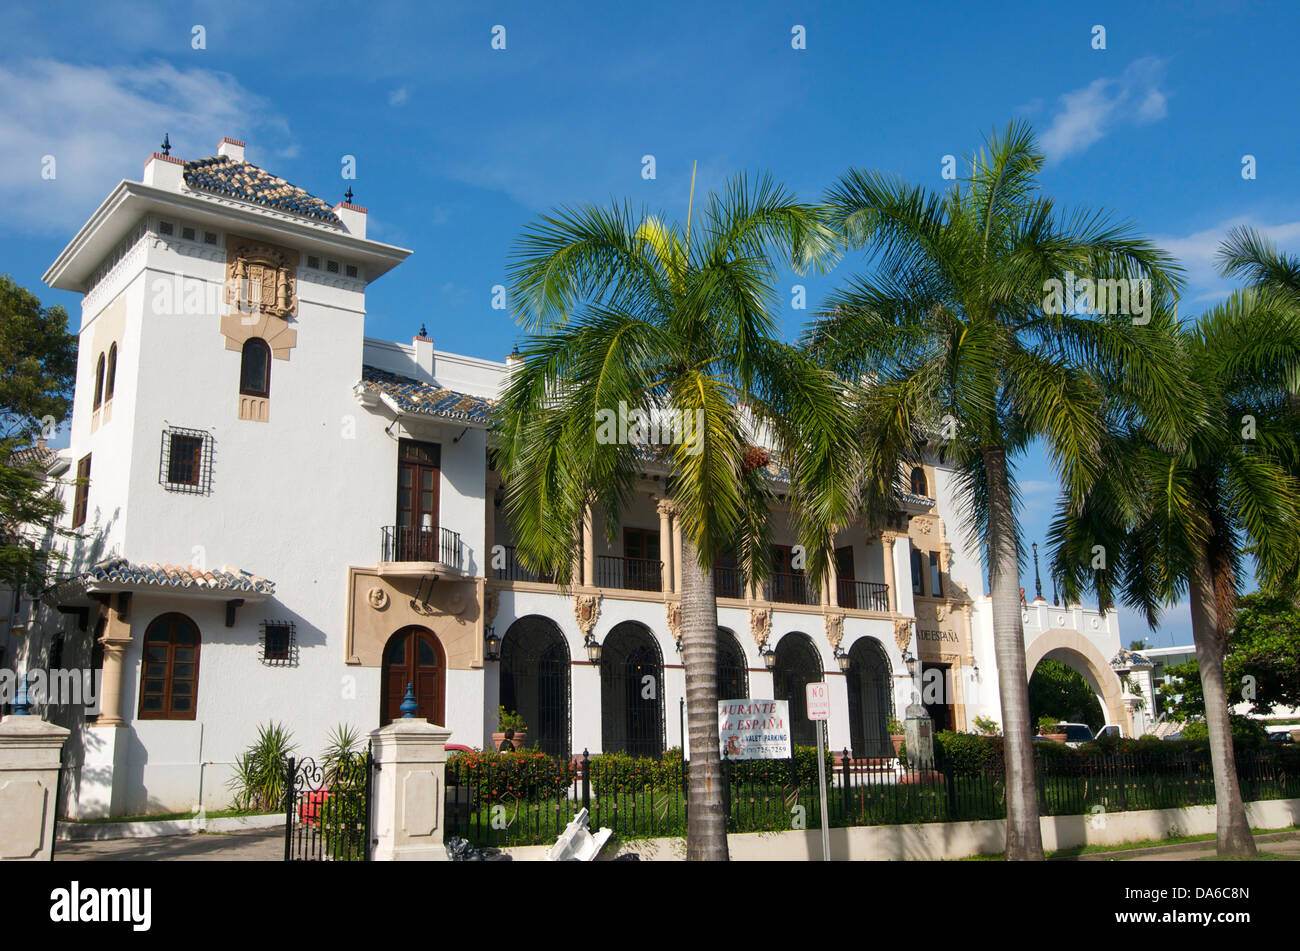 Puerto Rico, Caribbean, Greater Antilles, Antilles, San Juan, restaurant, building, construction, architecture, colonial style, Stock Photo